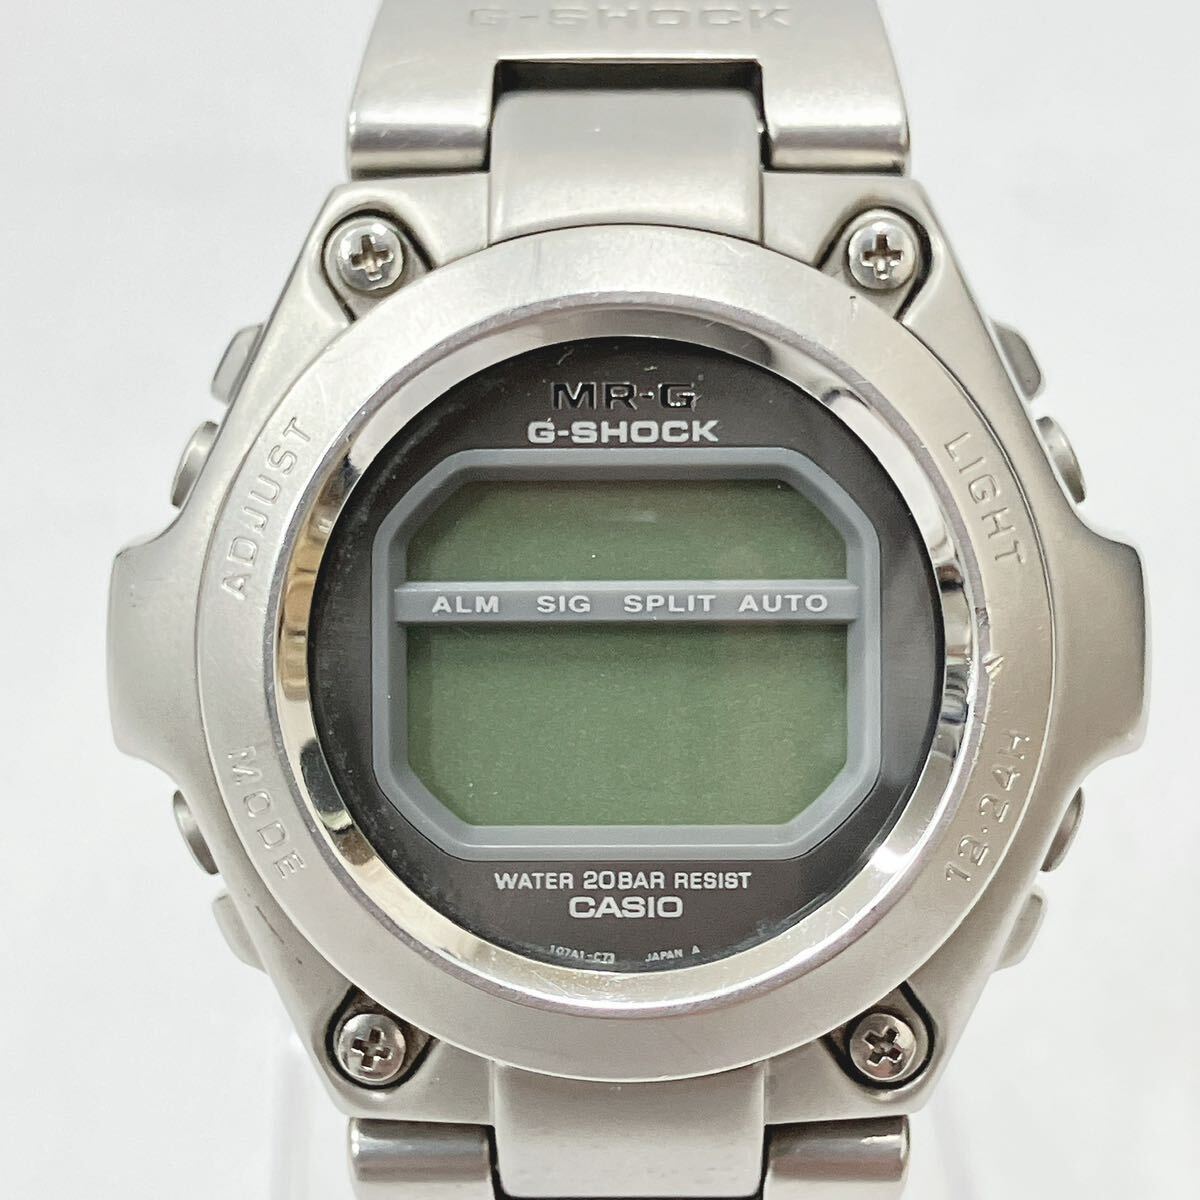 G-SHOCKji- shock CASIO Casio MRG-100 MR-G digital quartz men's wristwatch box opinion koma attaching 02-0410